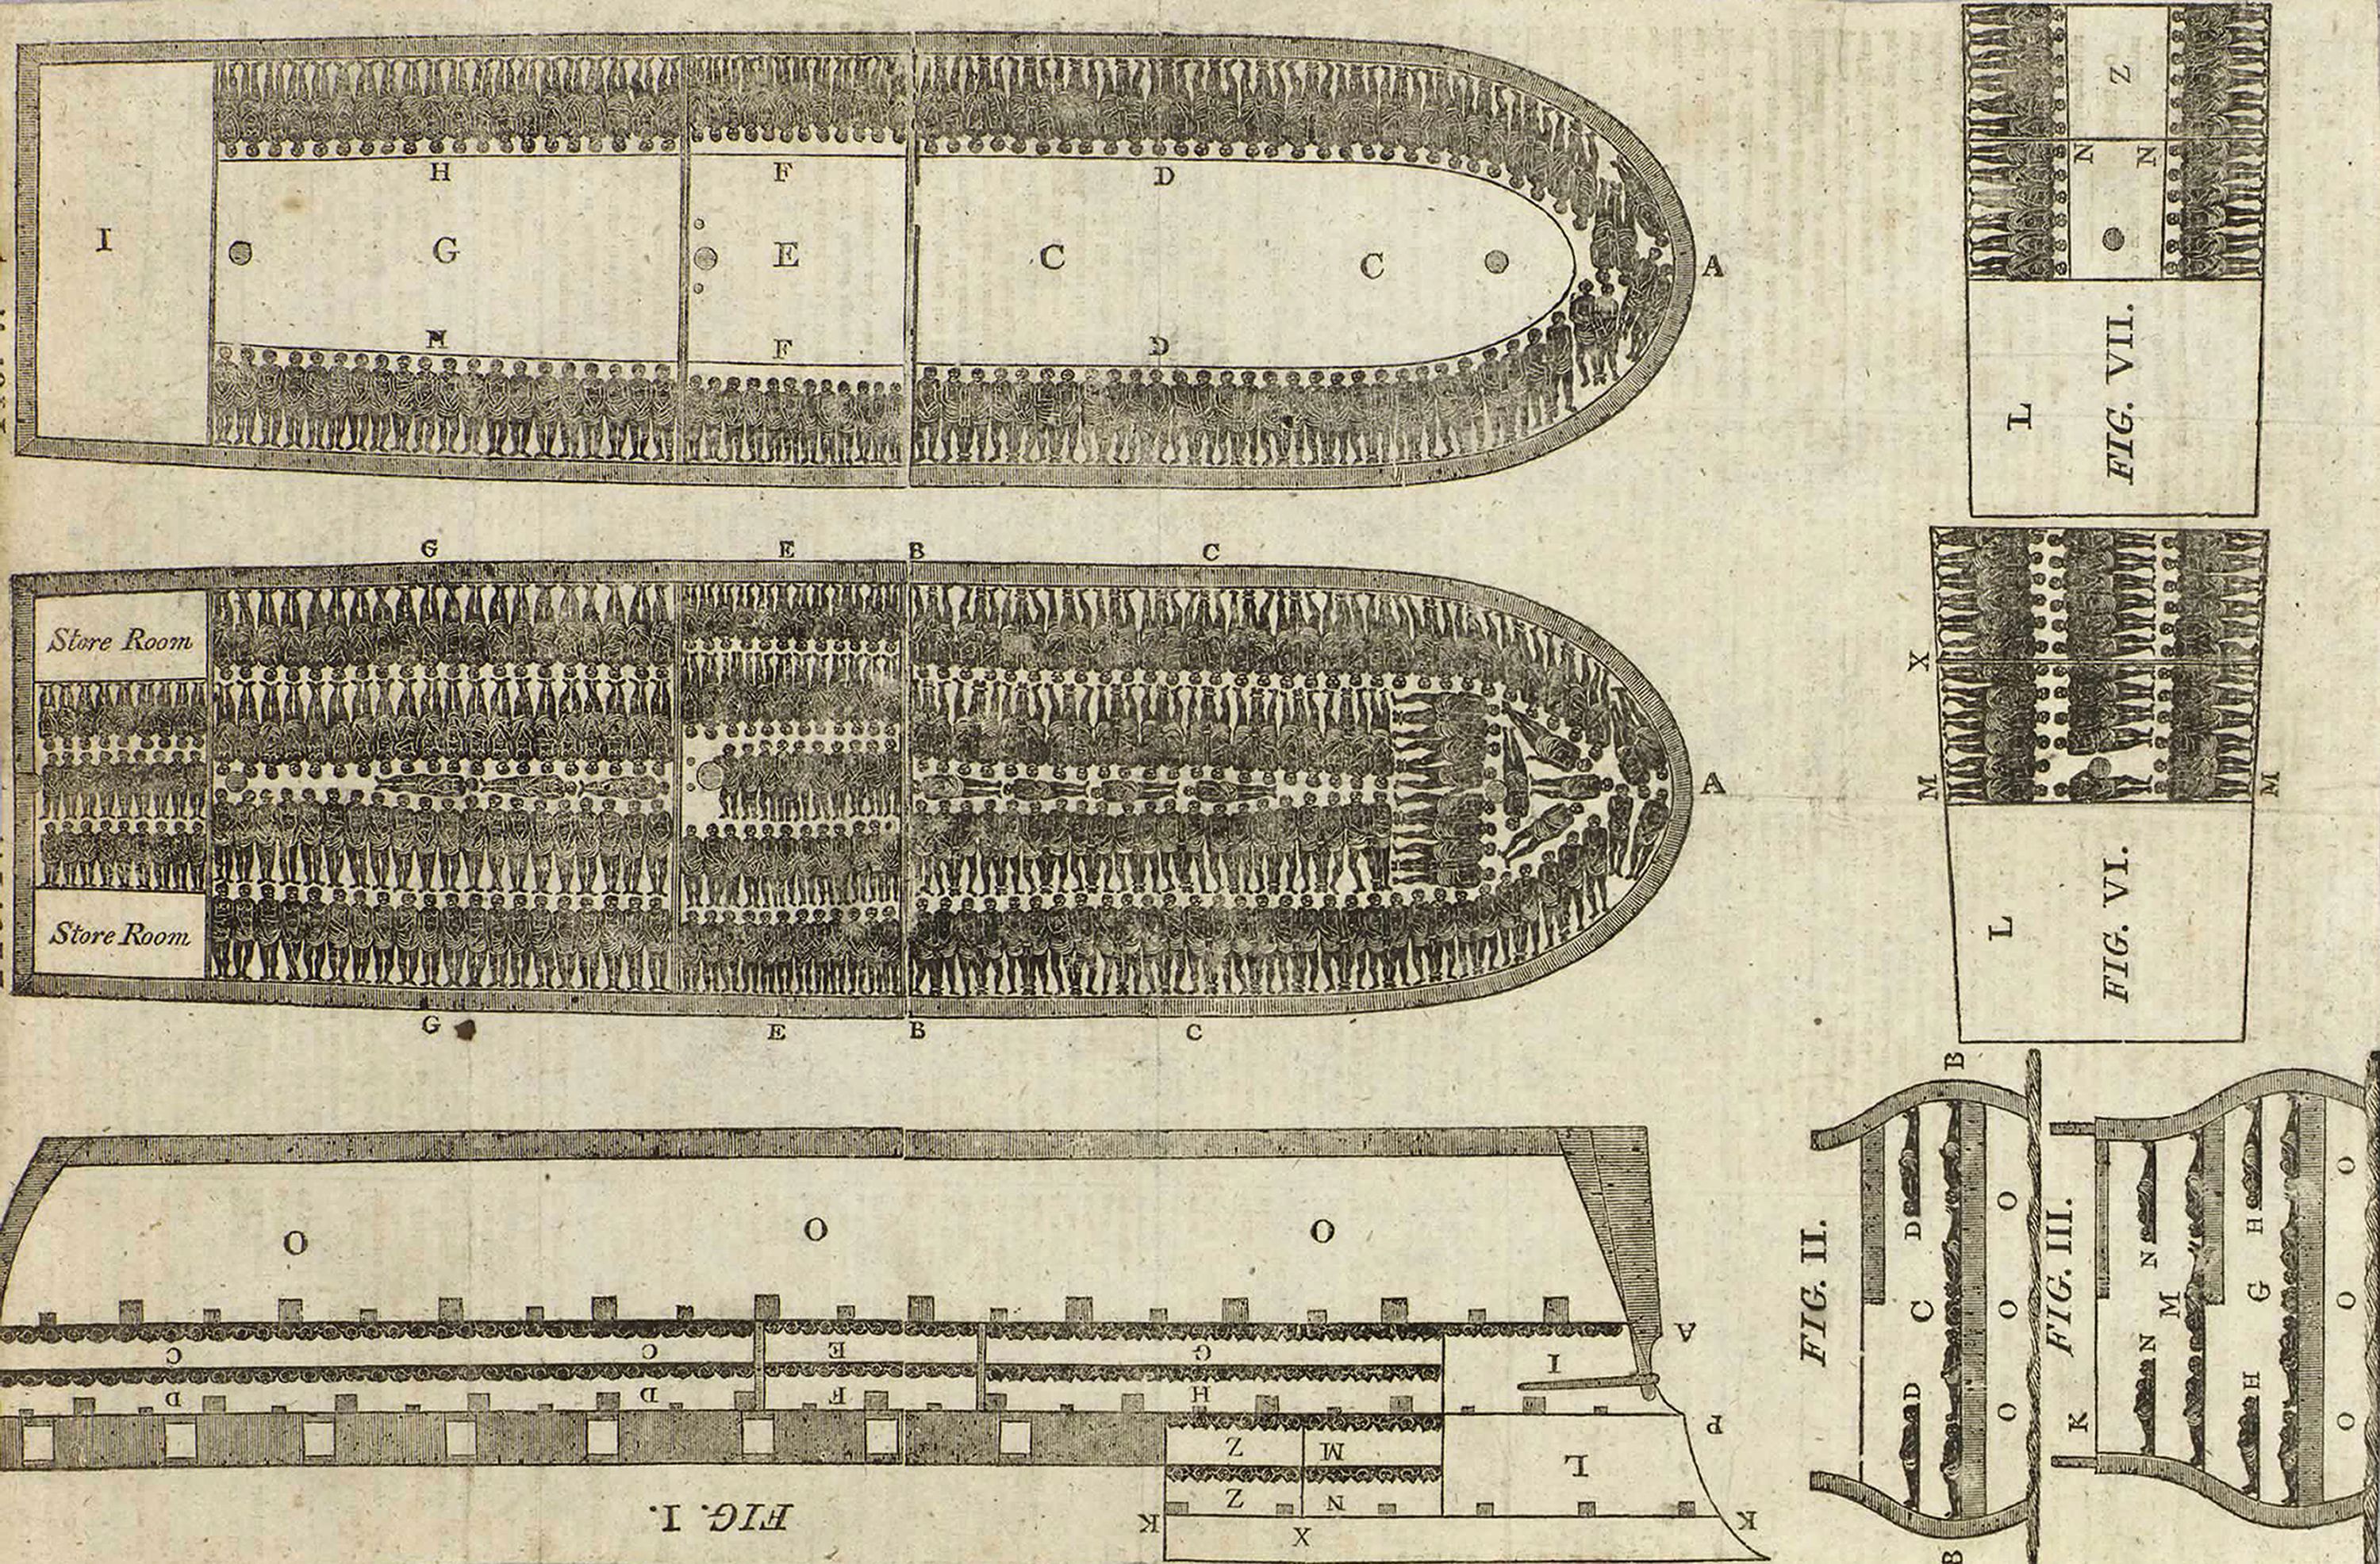 slave plantation diagram